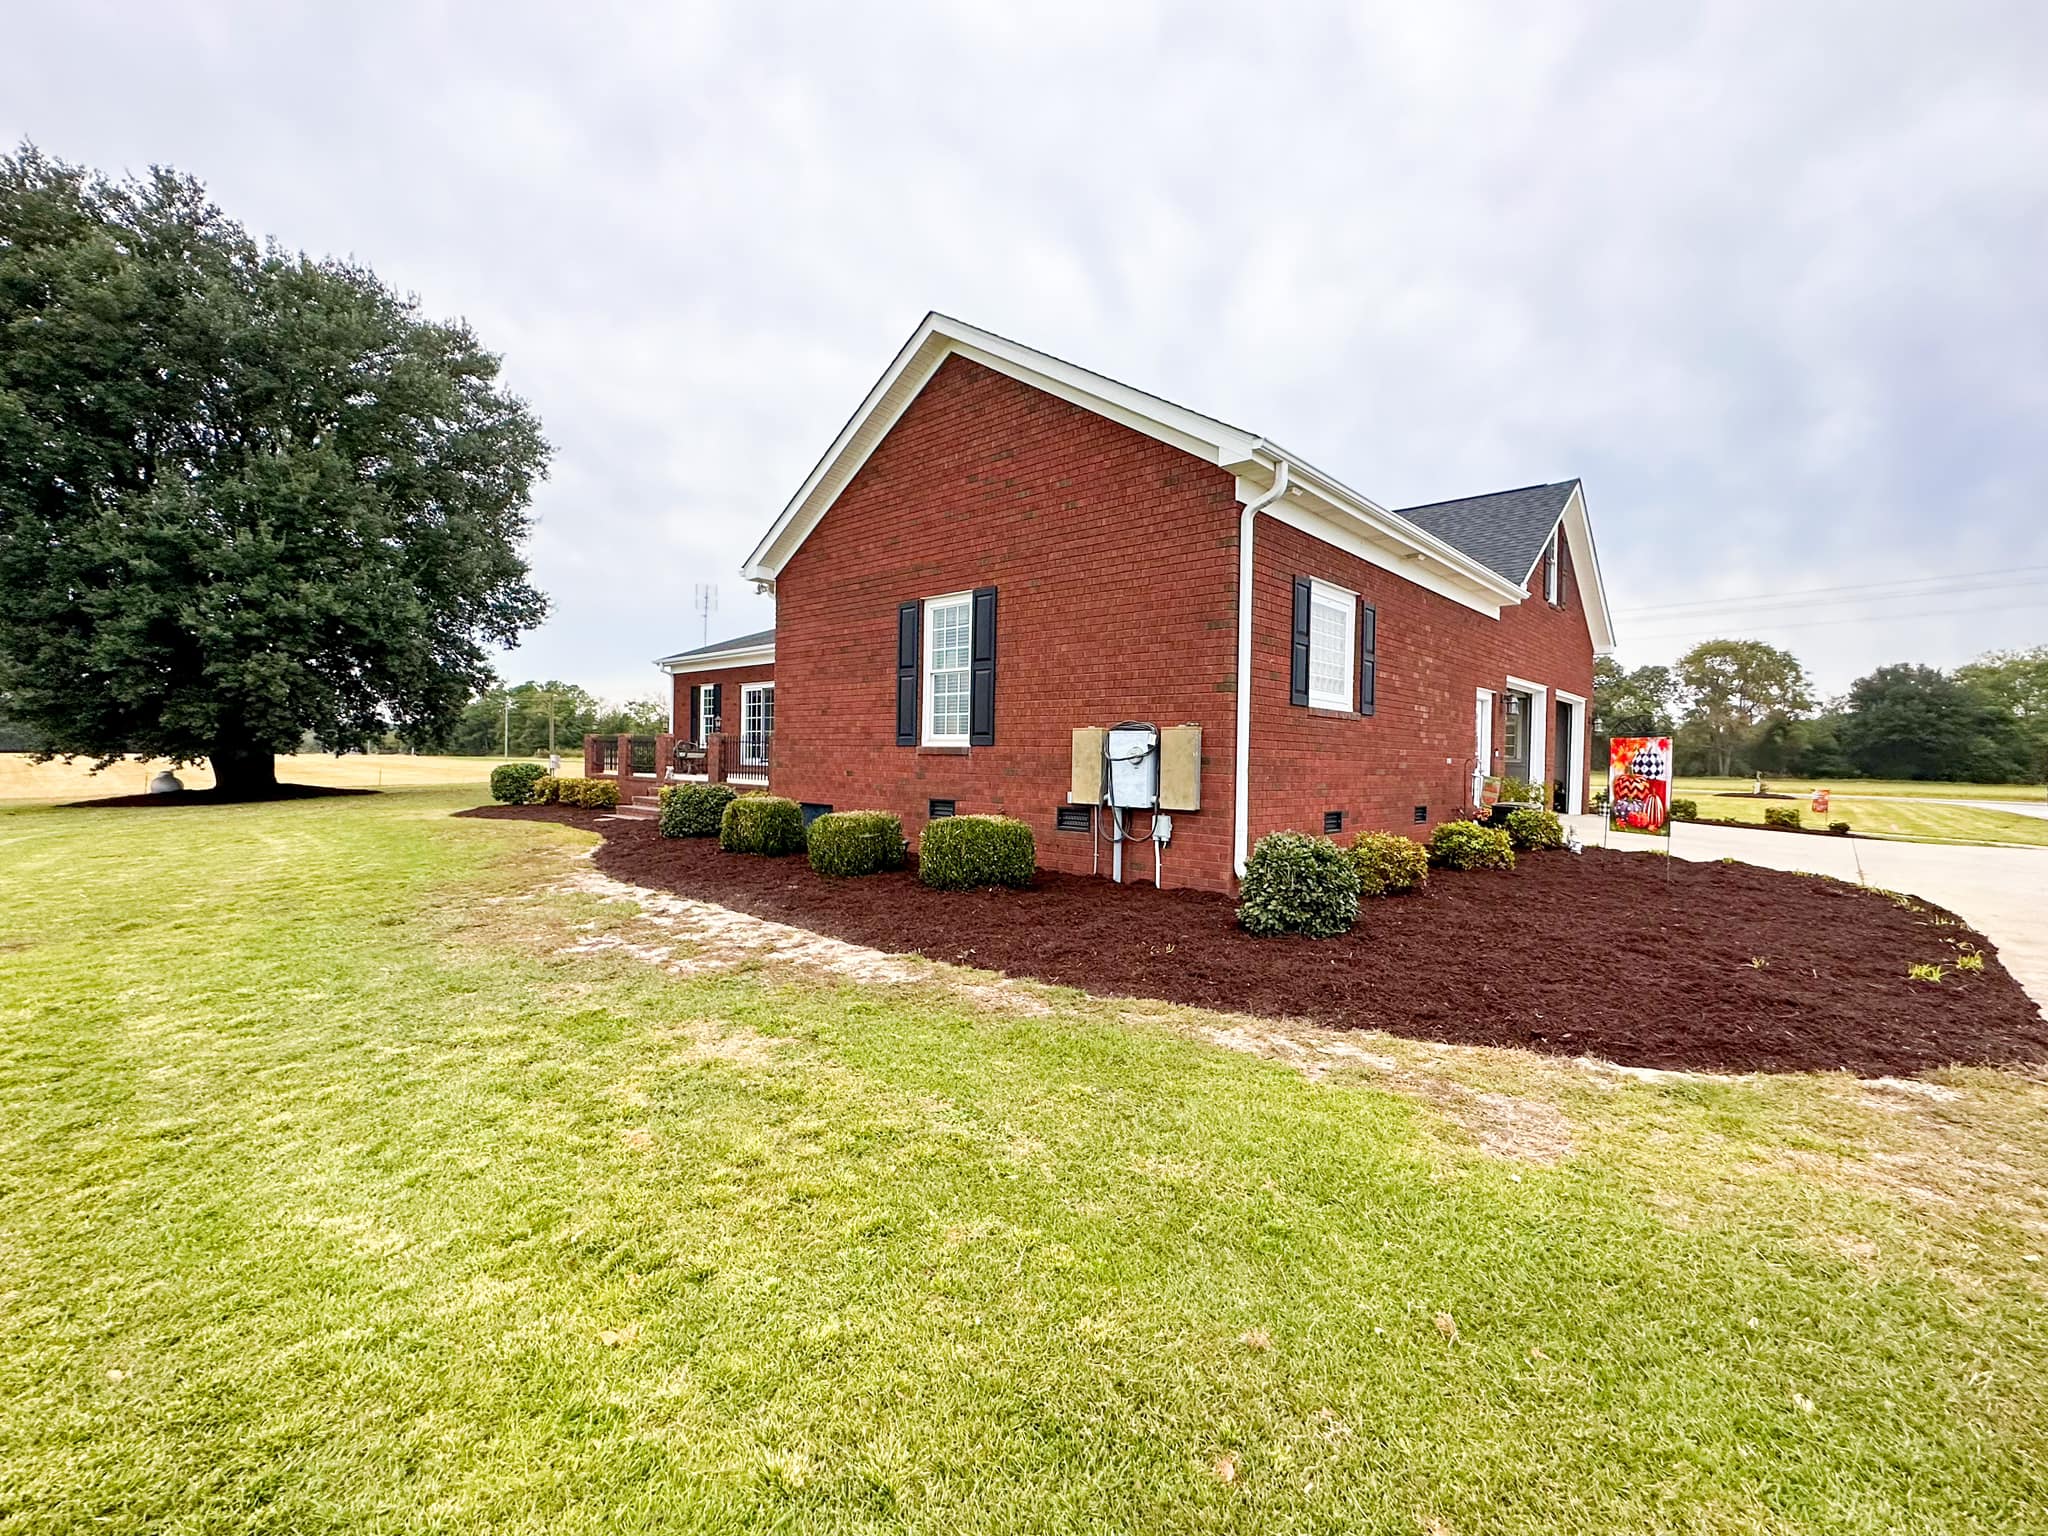 Riley Landscaping and Lawn Maintenance, LLC 405 E Washington St, La Grange North Carolina 28551